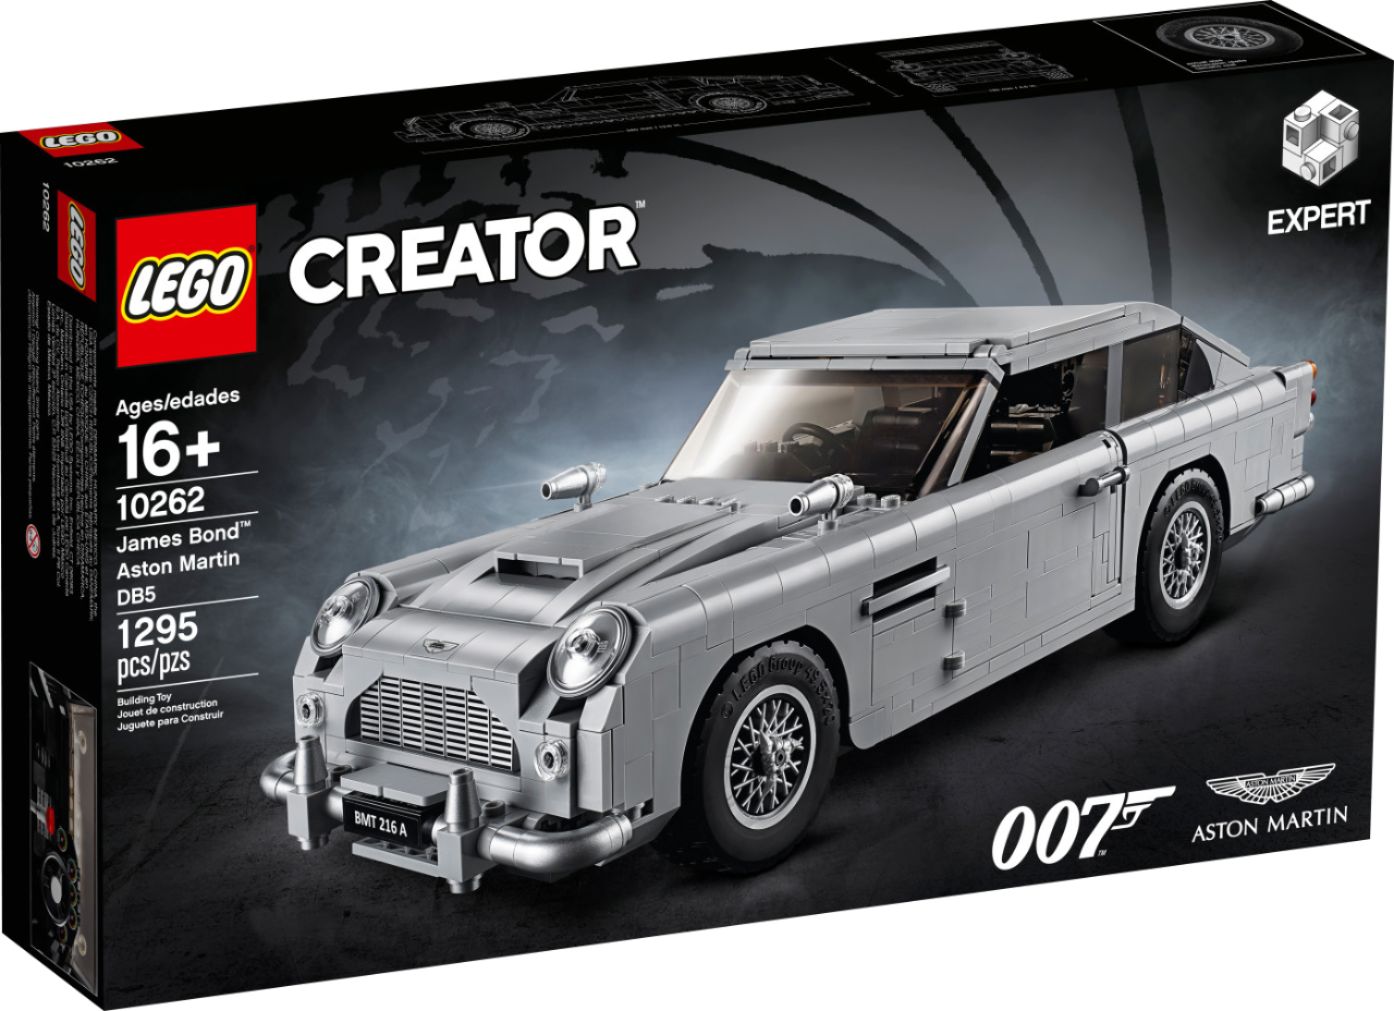 Details about   Building Blocks Creator Series 21046 James Bond Aston Martin Bricks Toy Set Kids 